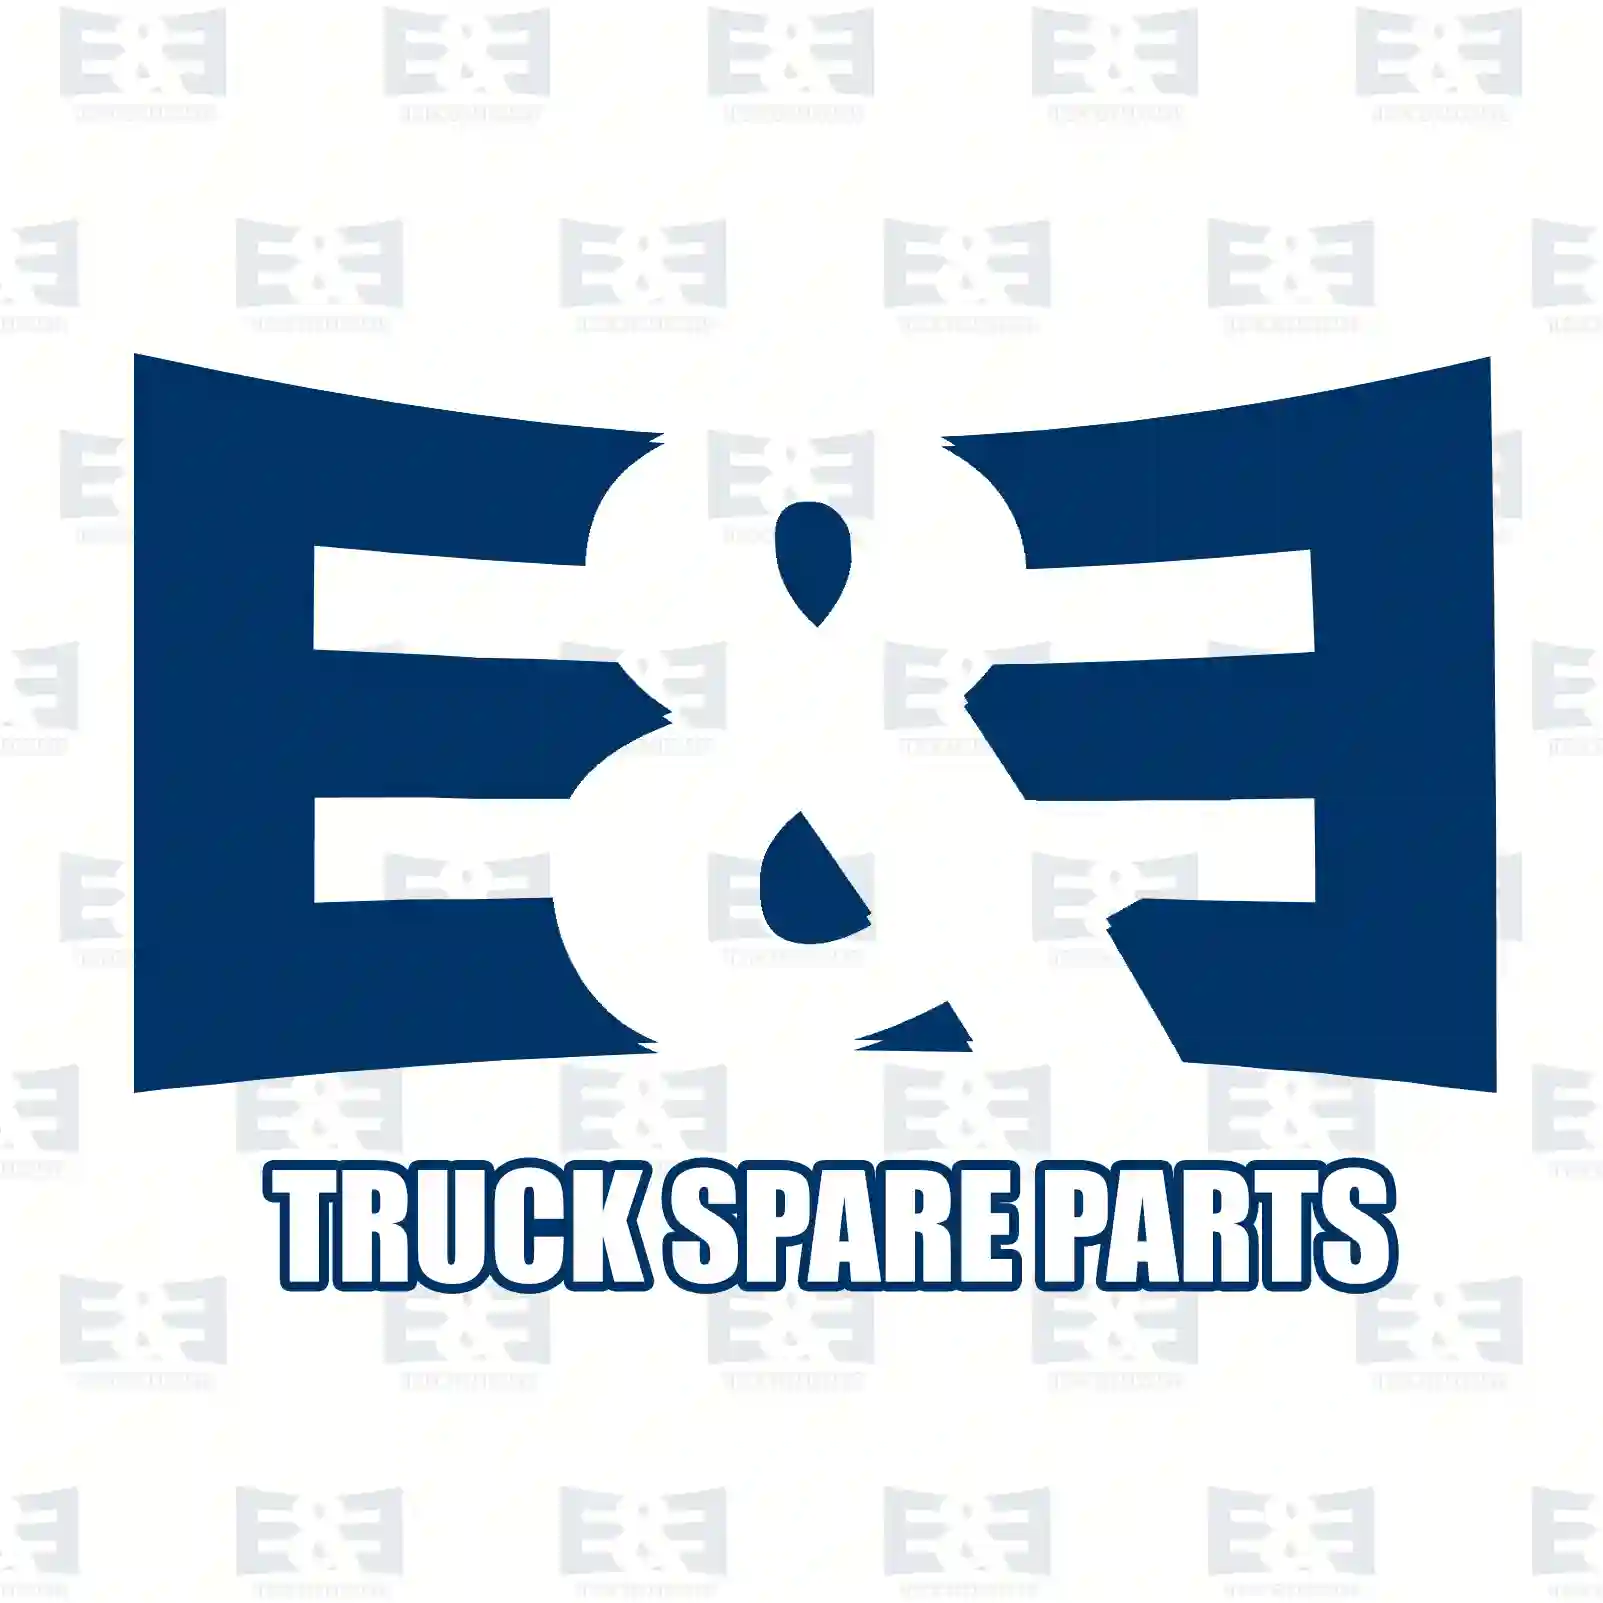 Spring Bracket Oil seal, EE No 2E2283408 ,  oem no:0660927, 0662004, 1261846, 660927, 662004, 00116066, 06220078, 0009971147, 05110485, 05110487, 29740522, 44881597, 215101140, ZG02746-0008 E&E Truck Spare Parts | Truck Spare Parts, Auotomotive Spare Parts